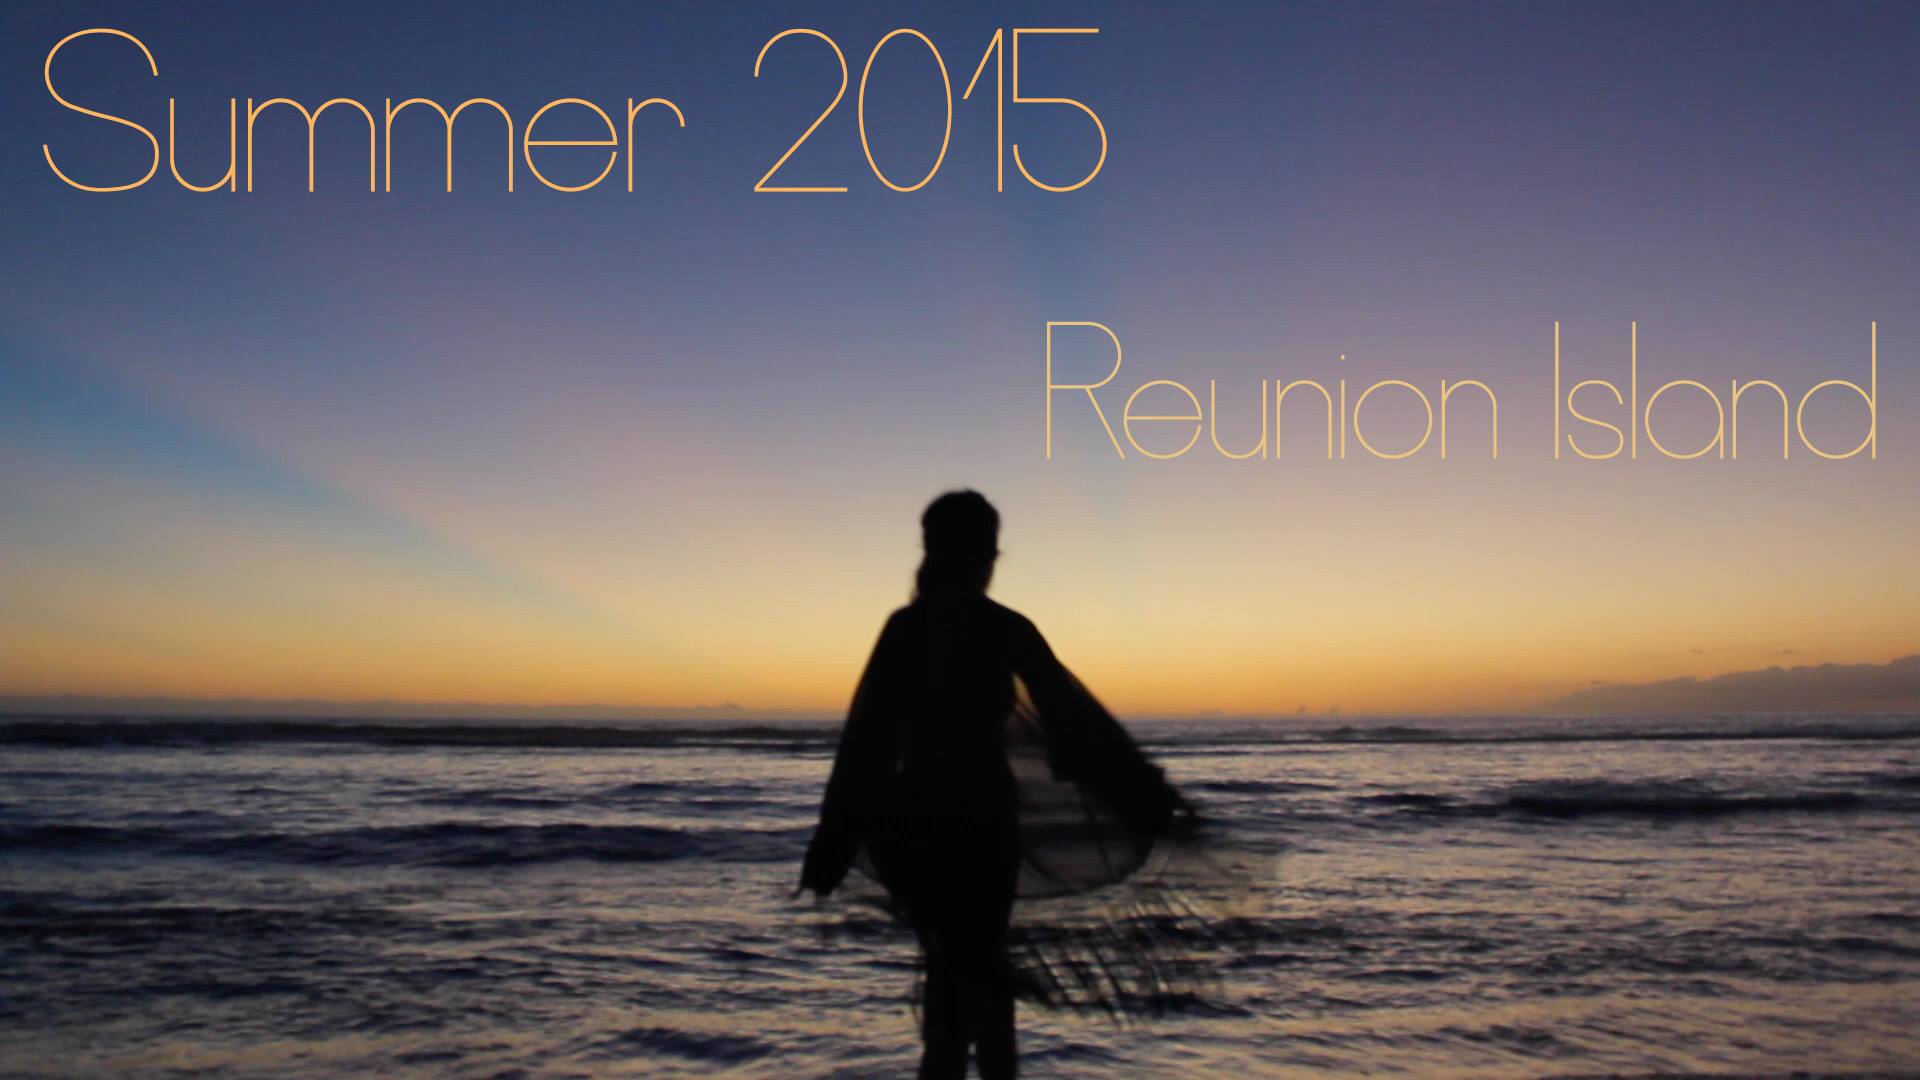 Summer 2015 – Reunion Island